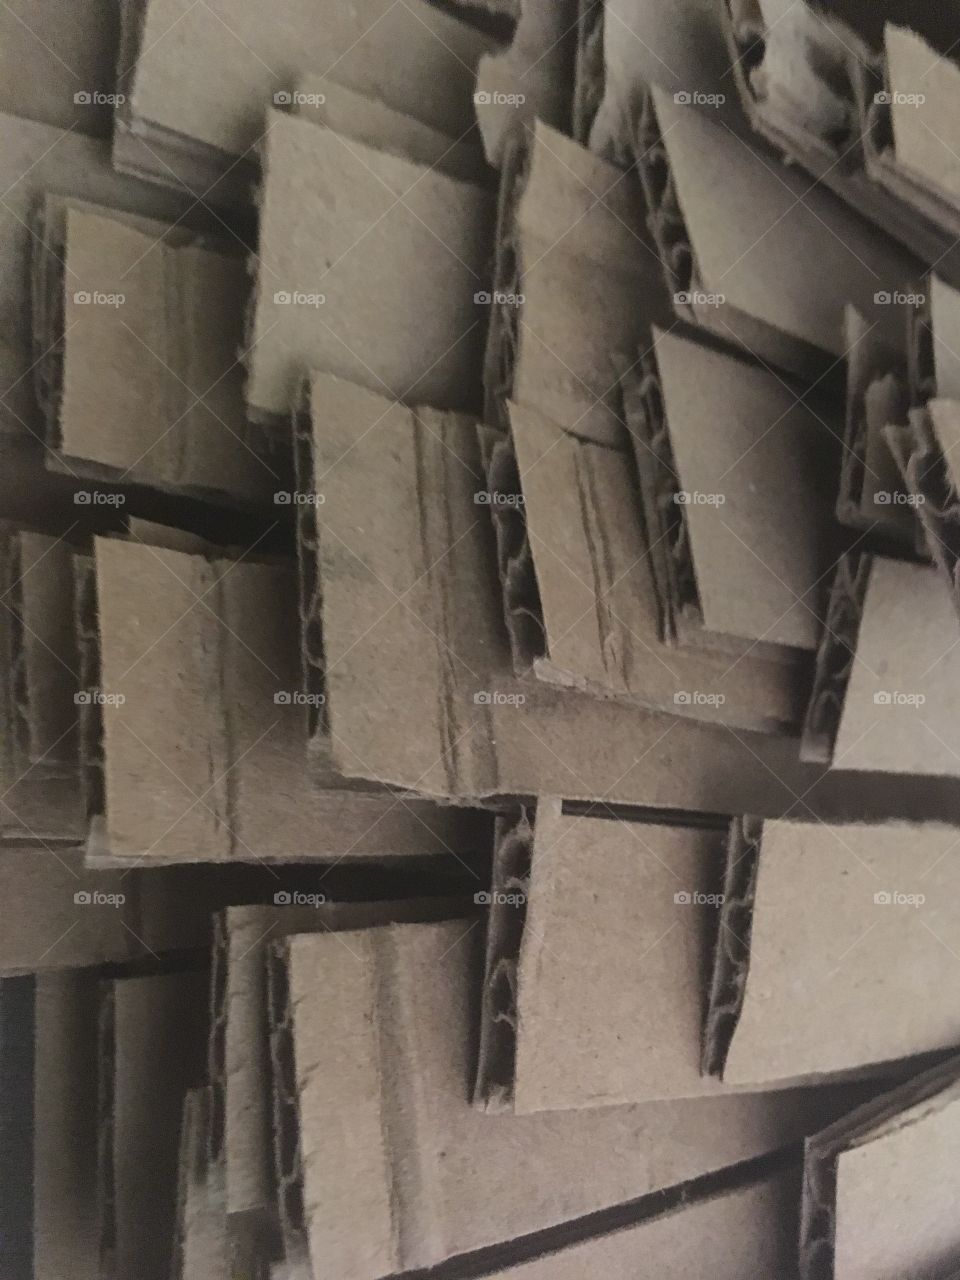 Cardboard Texture-rectangular strips of corrugated cardboard.